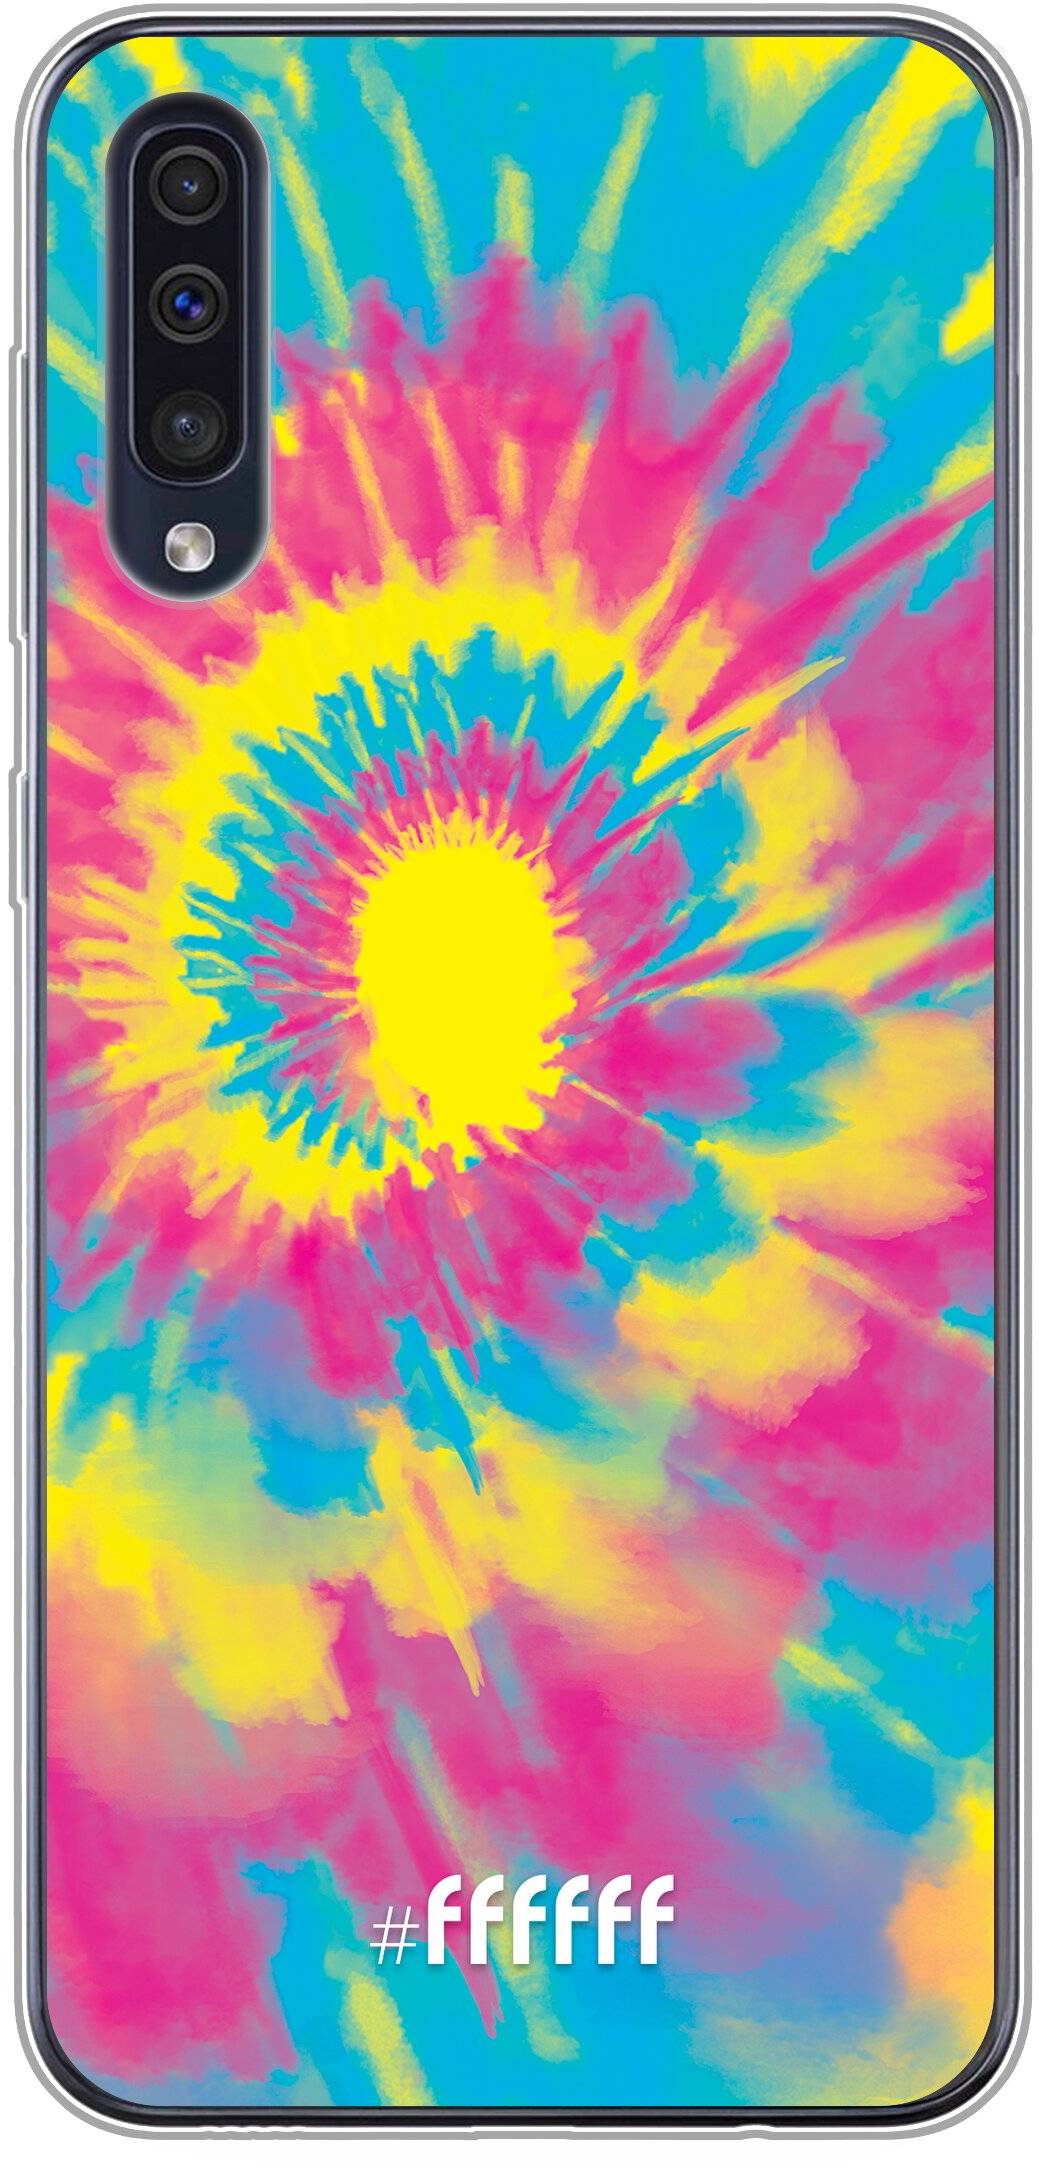 Psychedelic Tie Dye Galaxy A50